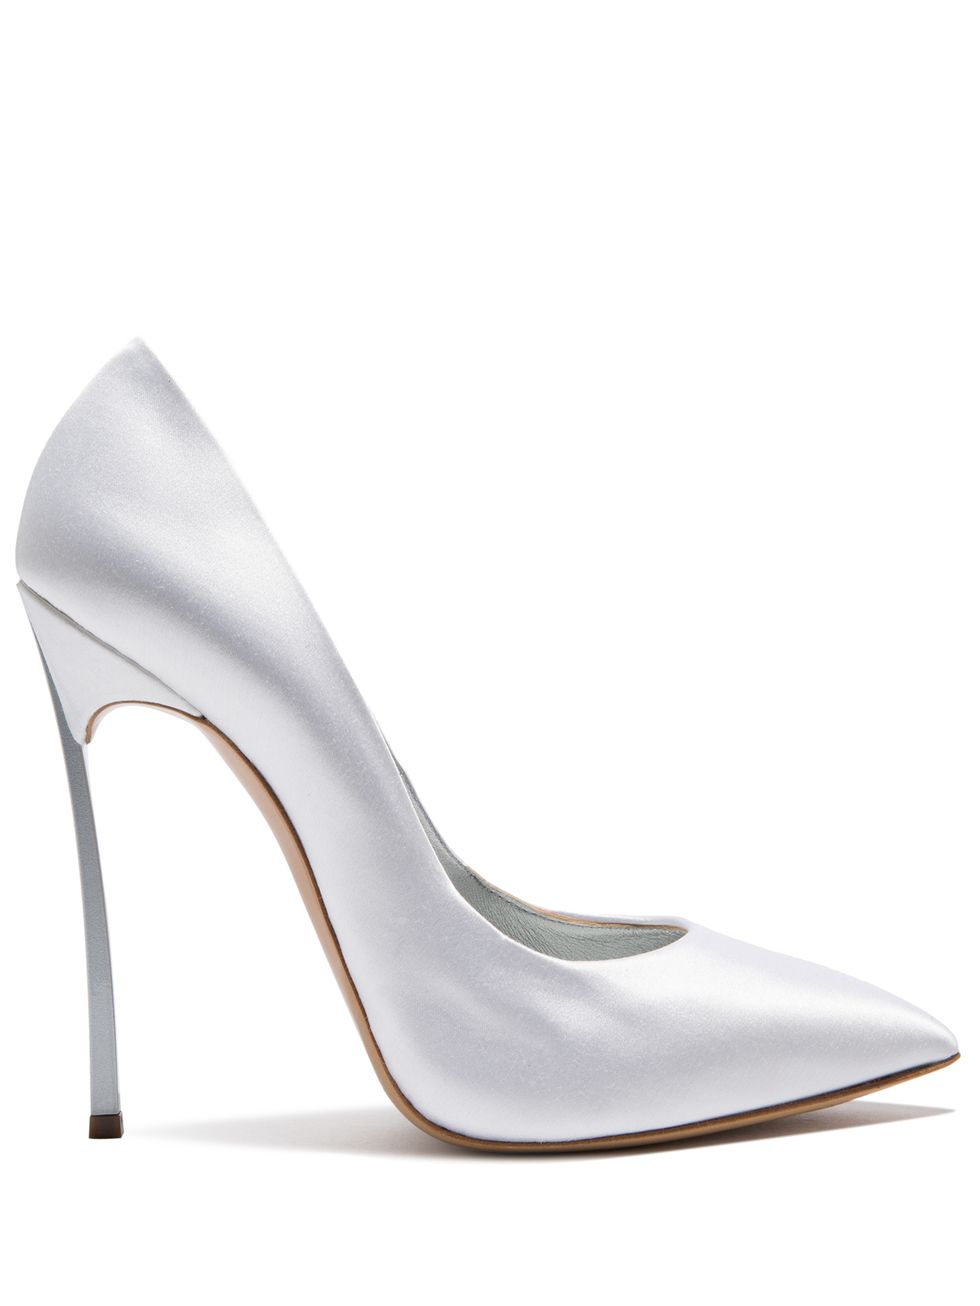 White, Tan, Grey, High heels, Basic pump, Beige, Sandal, Foot, Silver, Bridal shoe, 